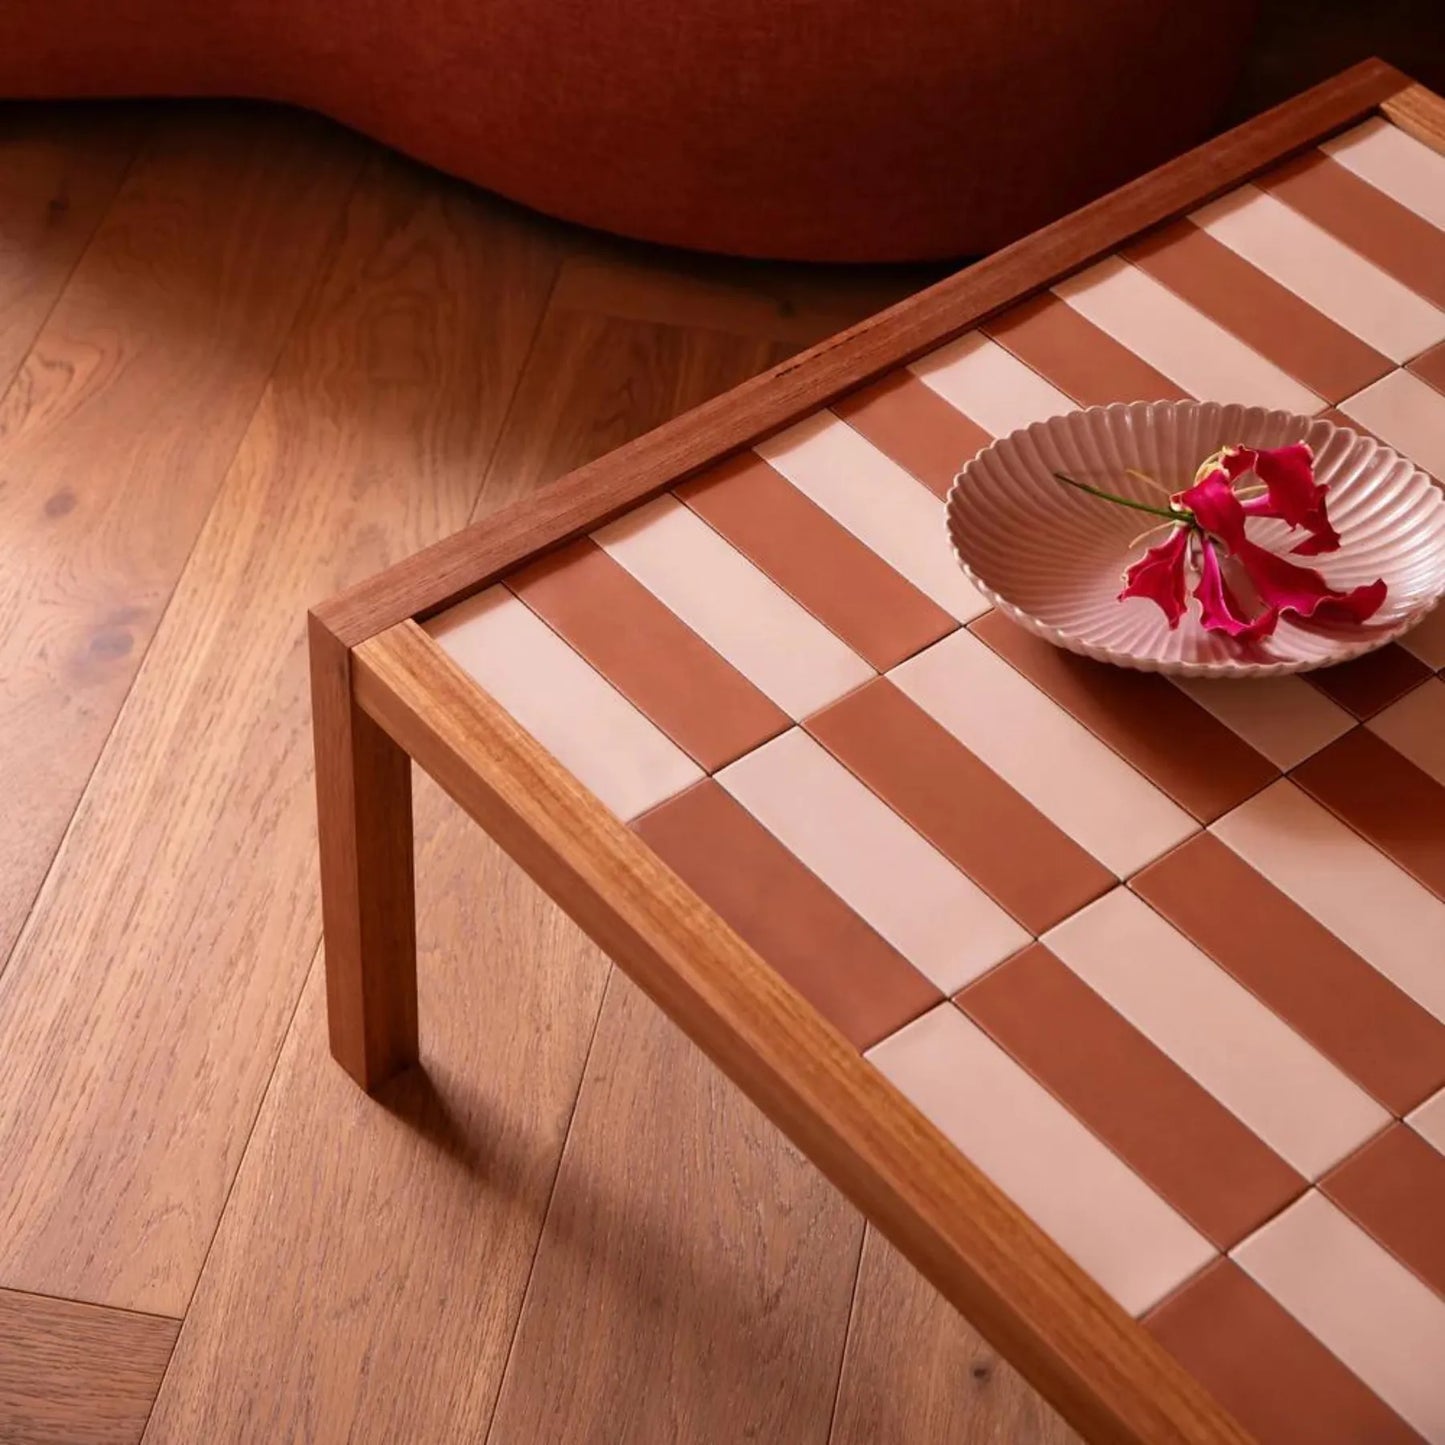 Tiled Coffee Table - Blush Terracotta